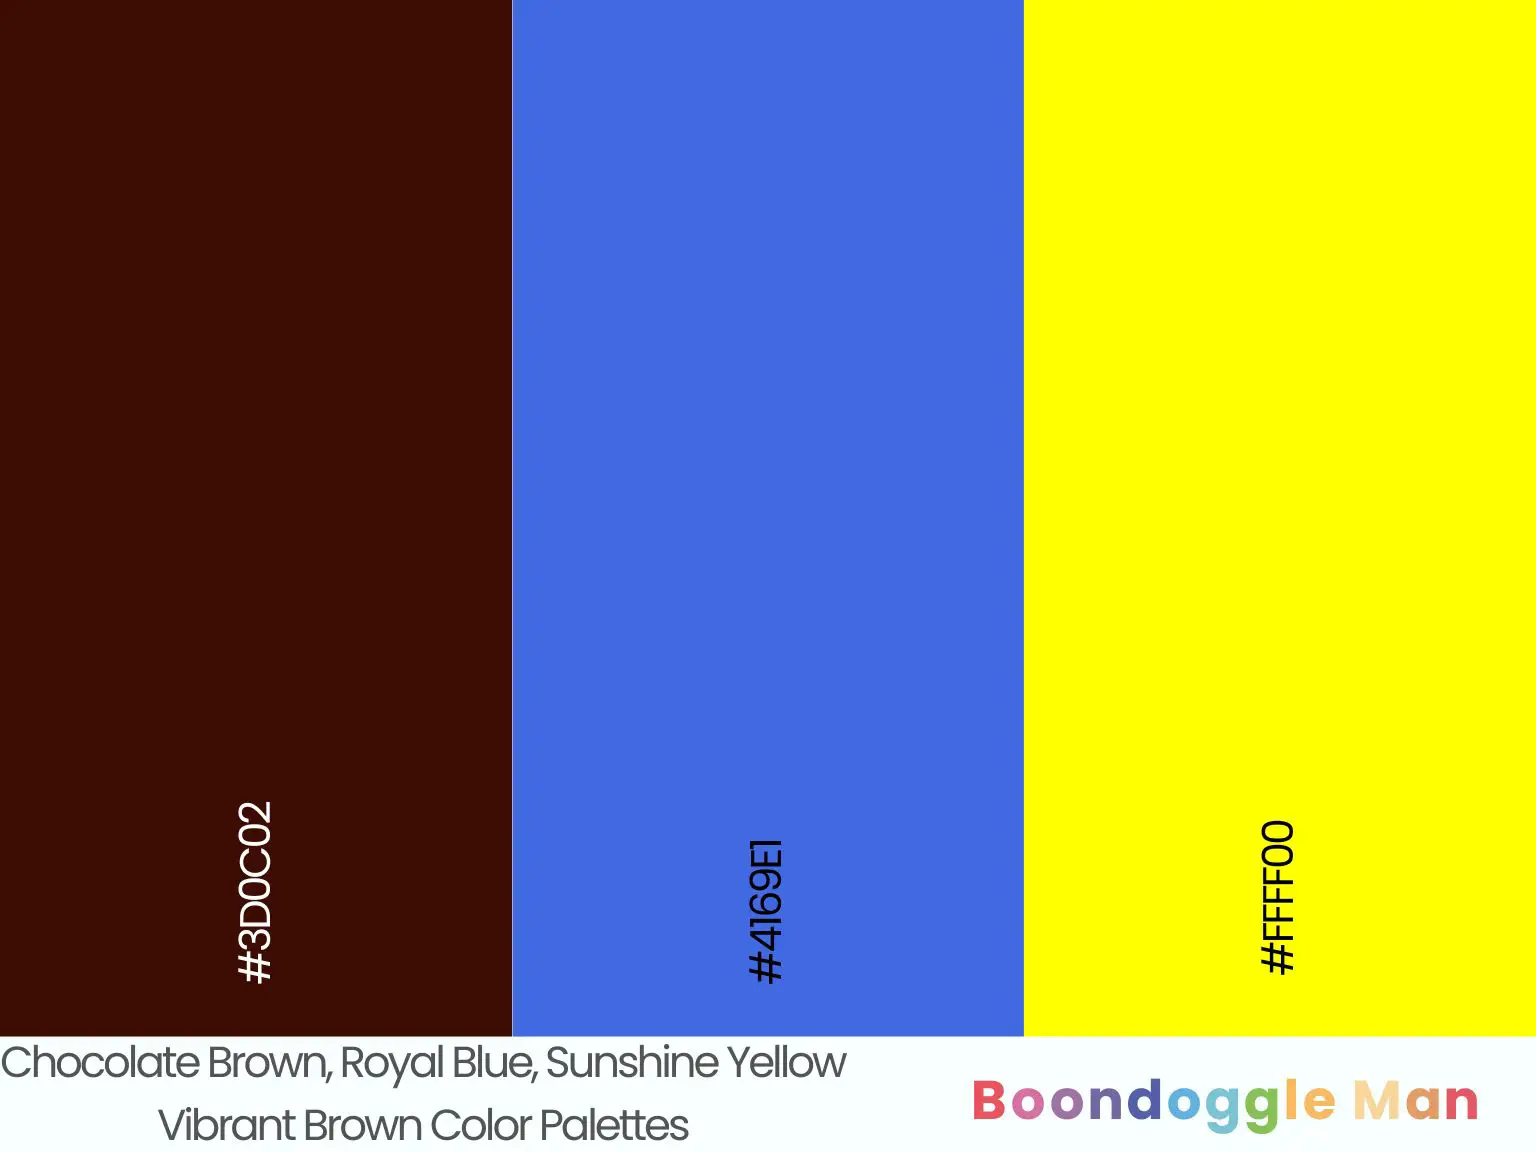 Chocolate Brown, Royal Blue, Sunshine Yellow